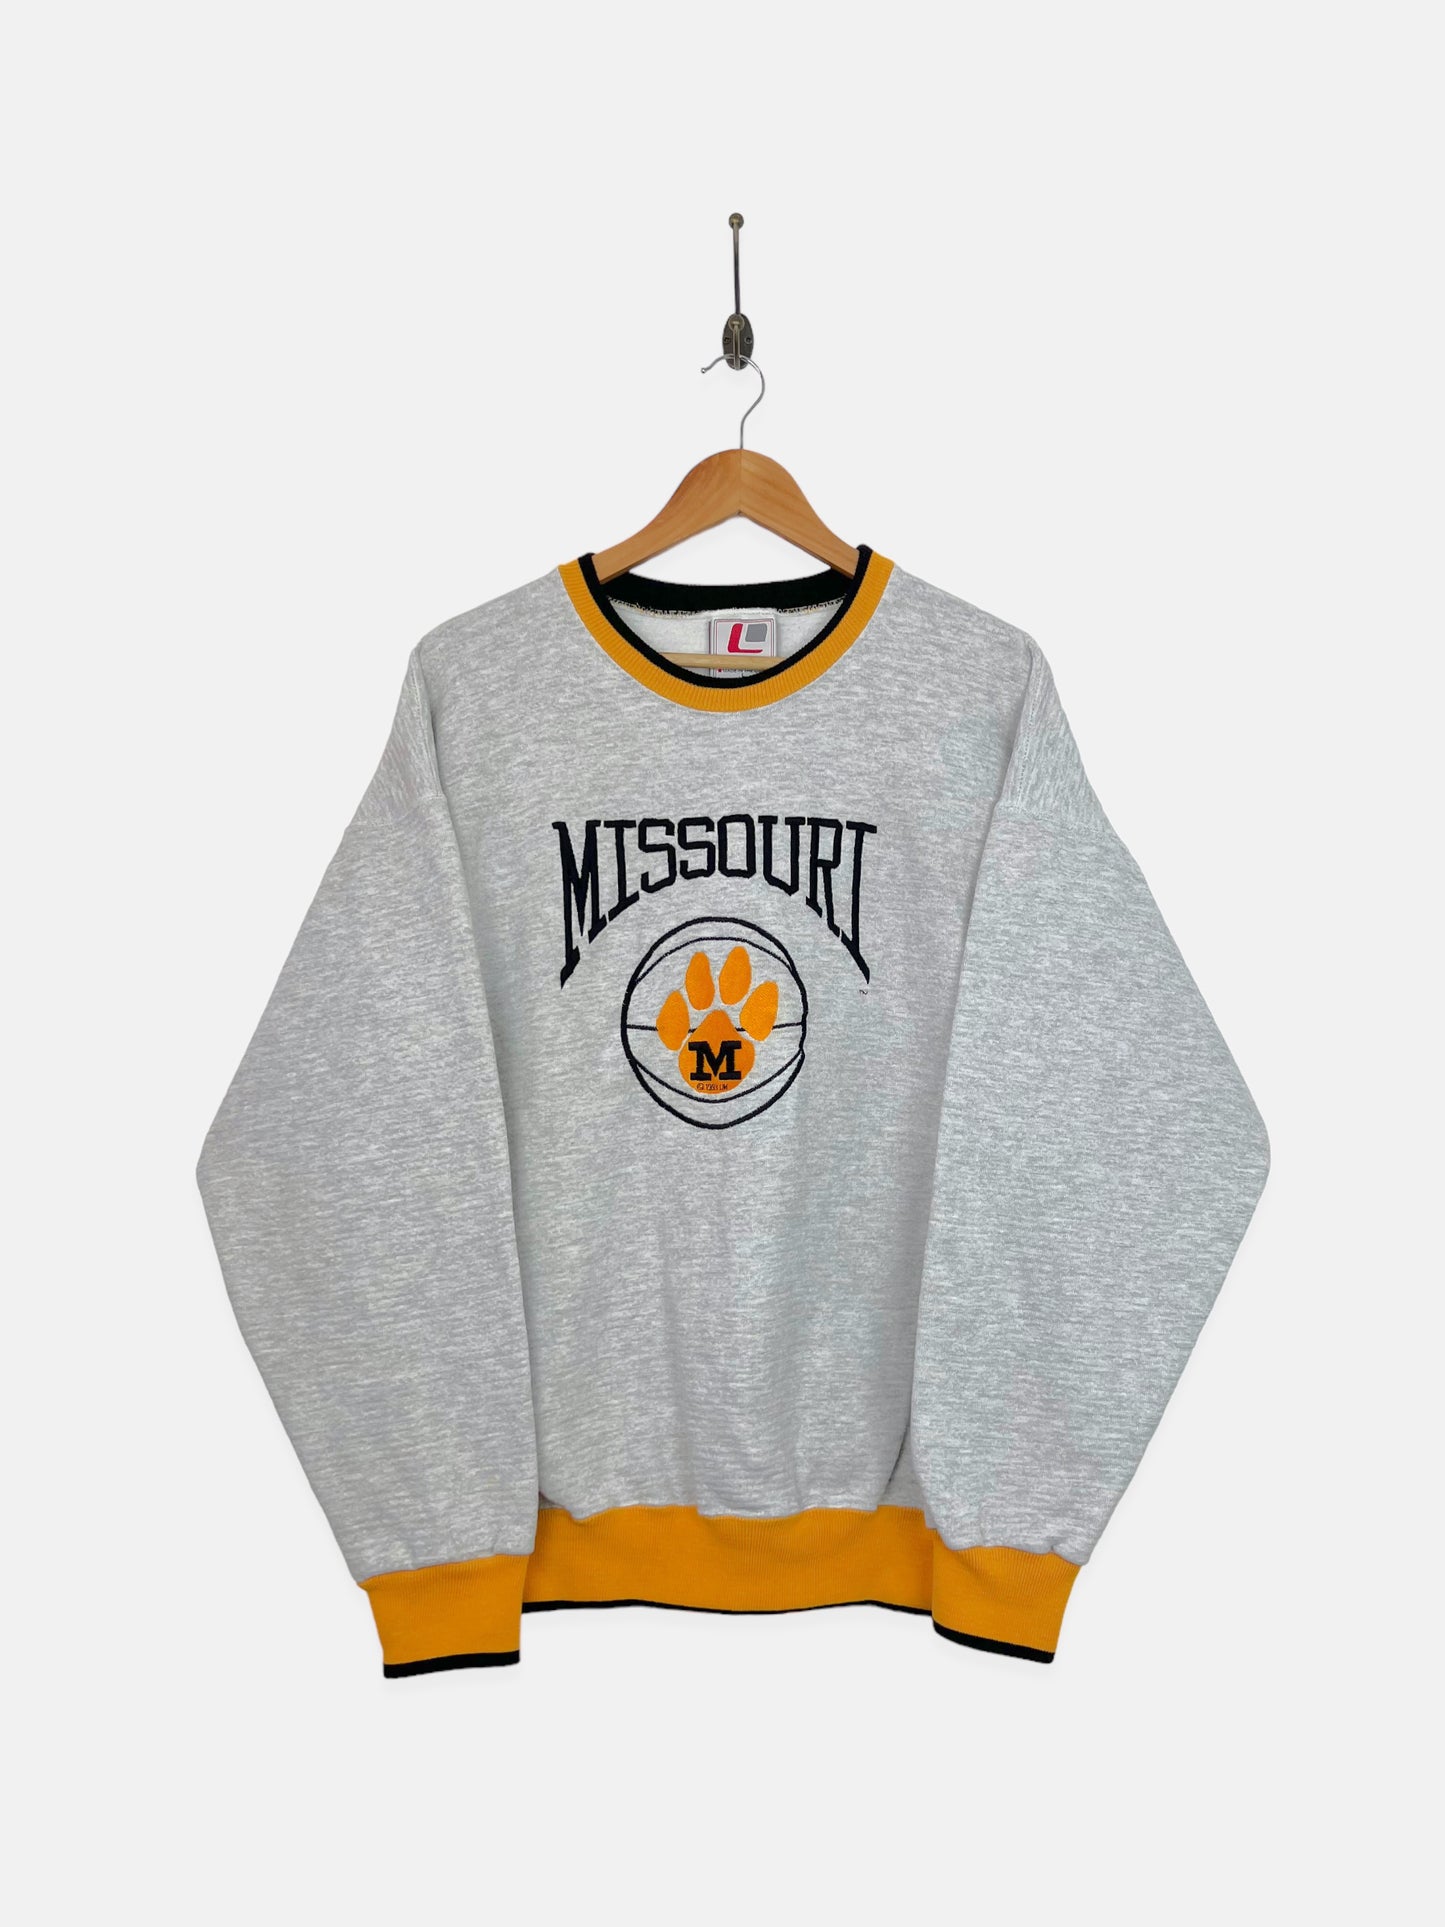 90's Missouri Tigers USA Made Embroidered Vintage Sweatshirt Size